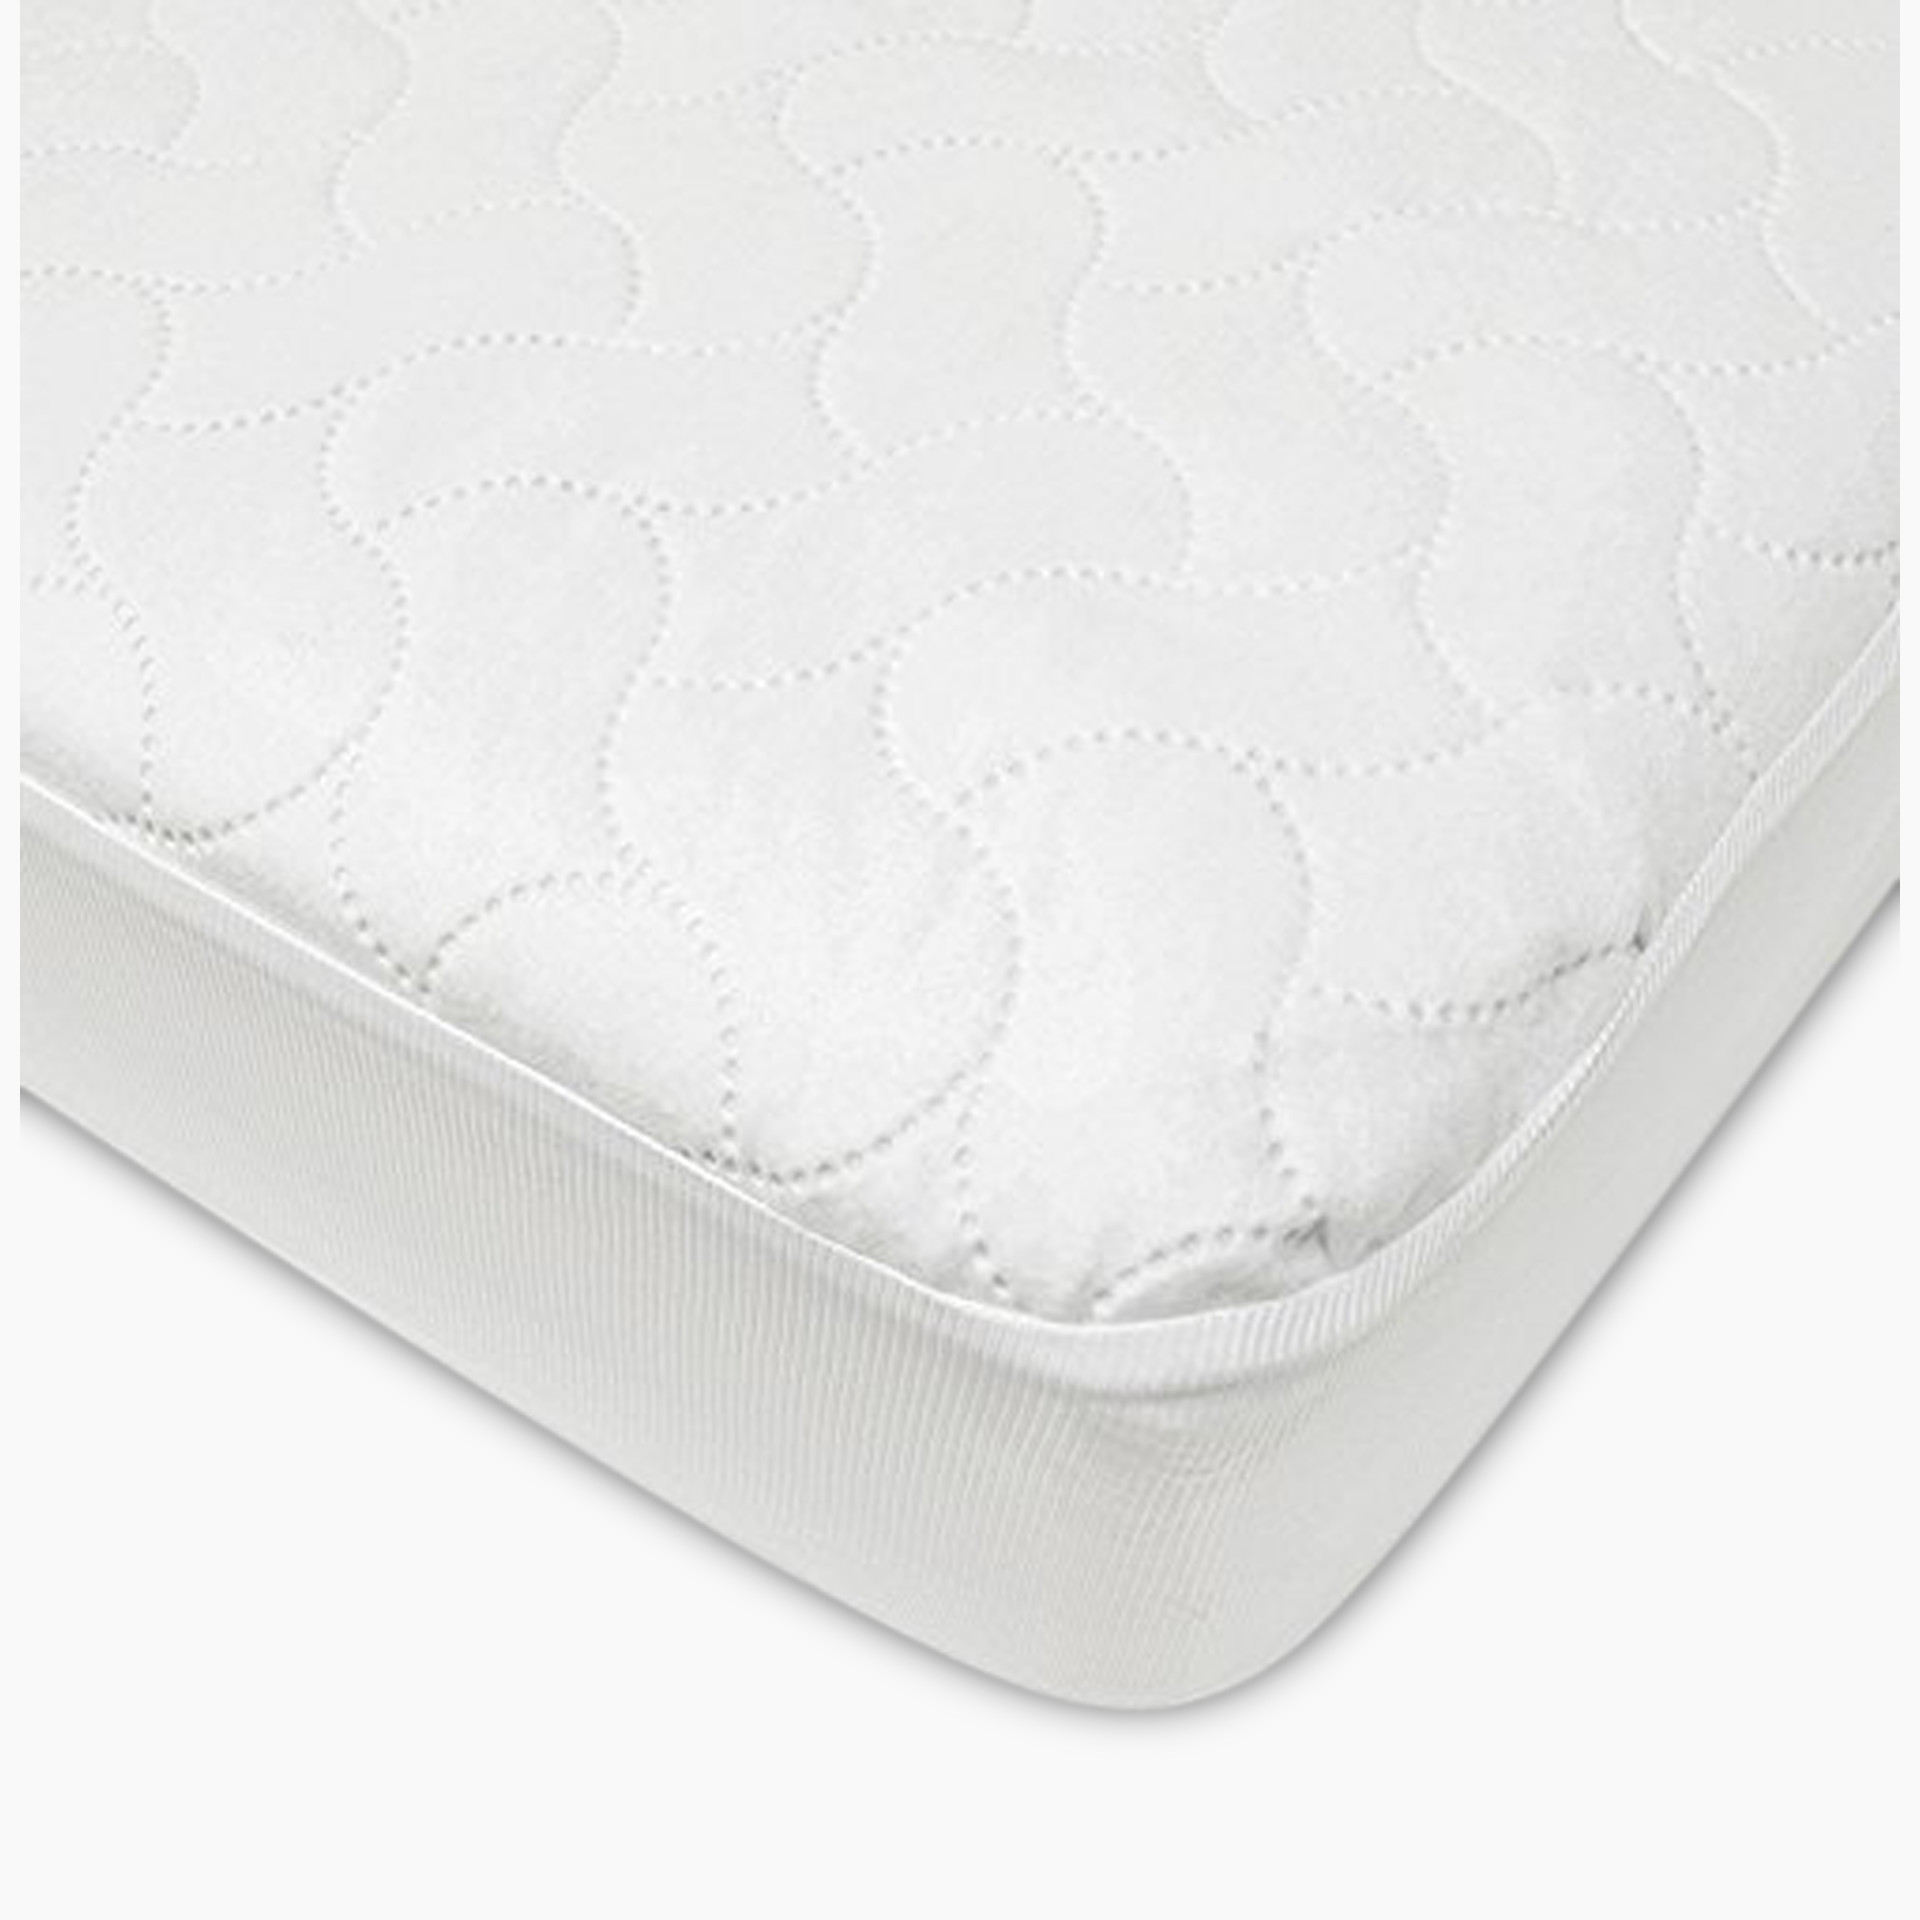 Waterproof baby mattress pads : Organic Waterproof Covers - Bassinet & Crib